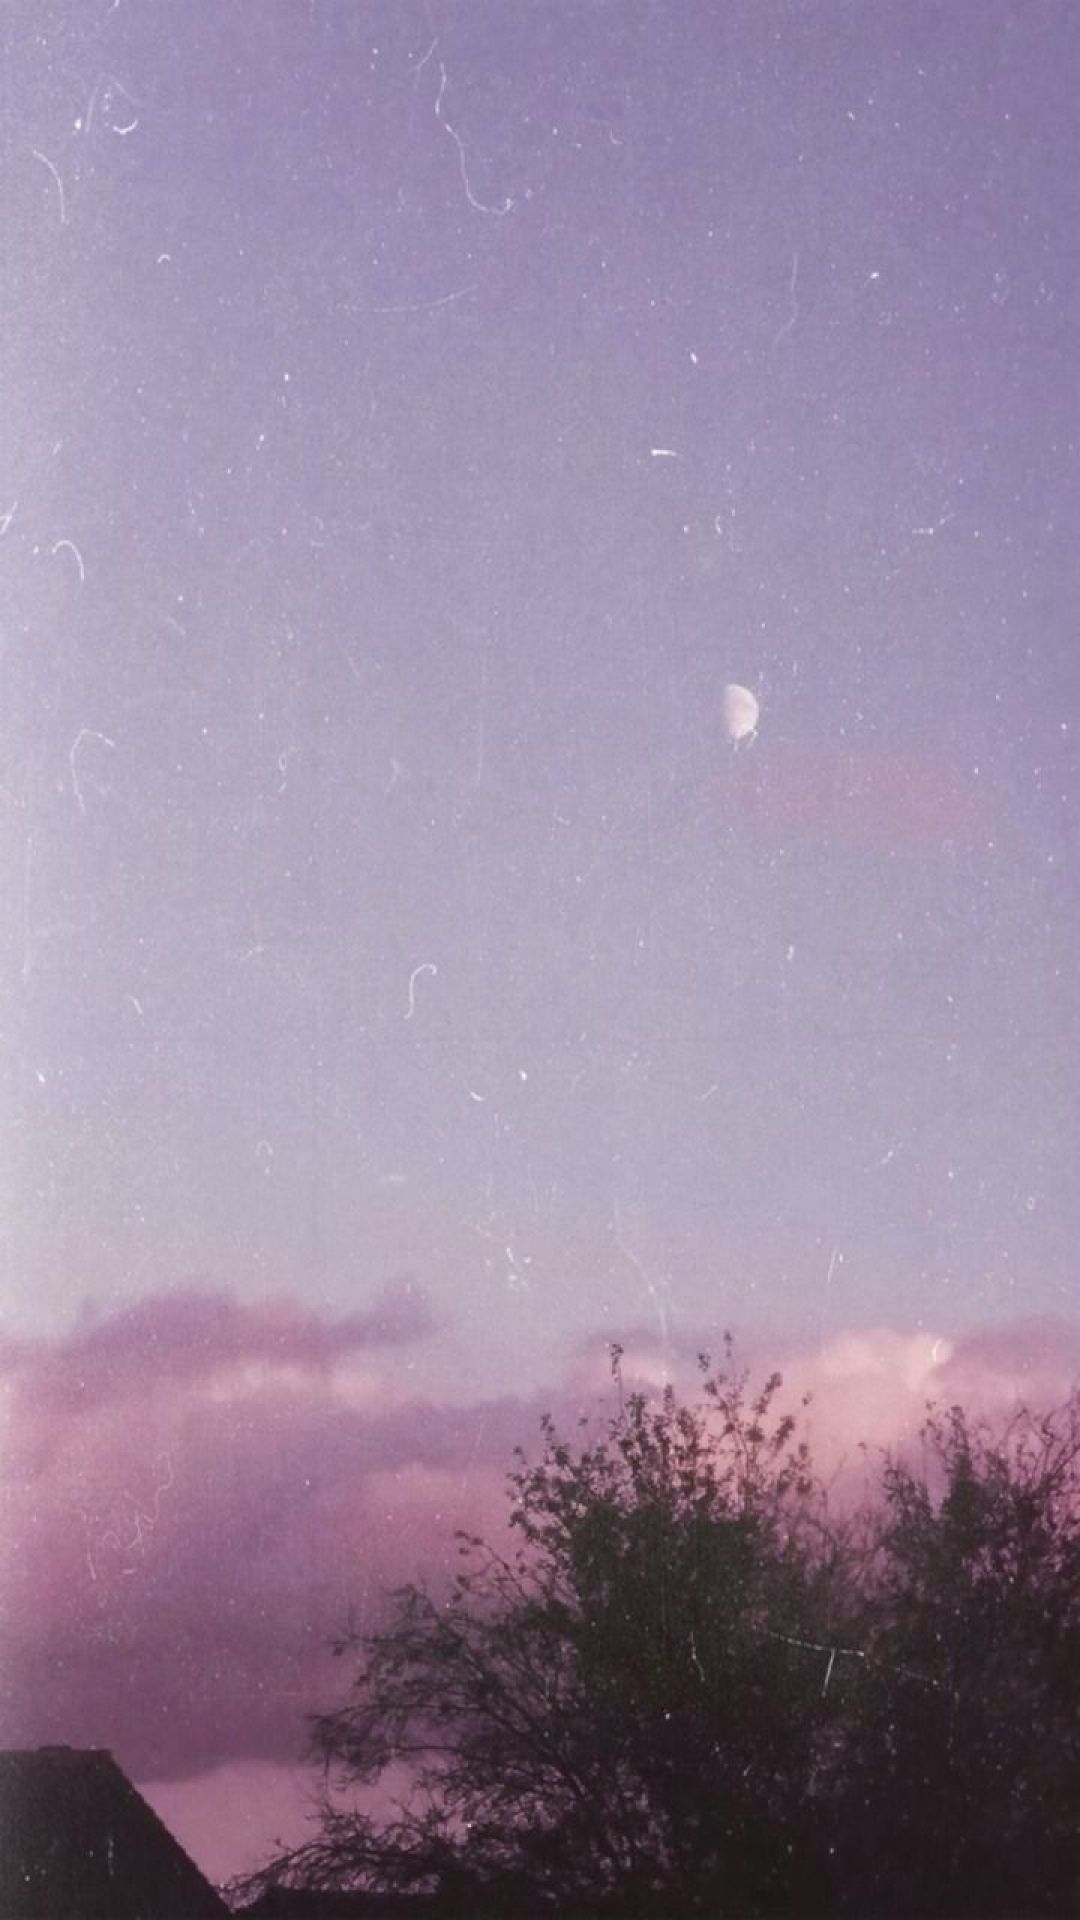 Aesthetic phone wallpaper of a half moon in a purple sky - Moon